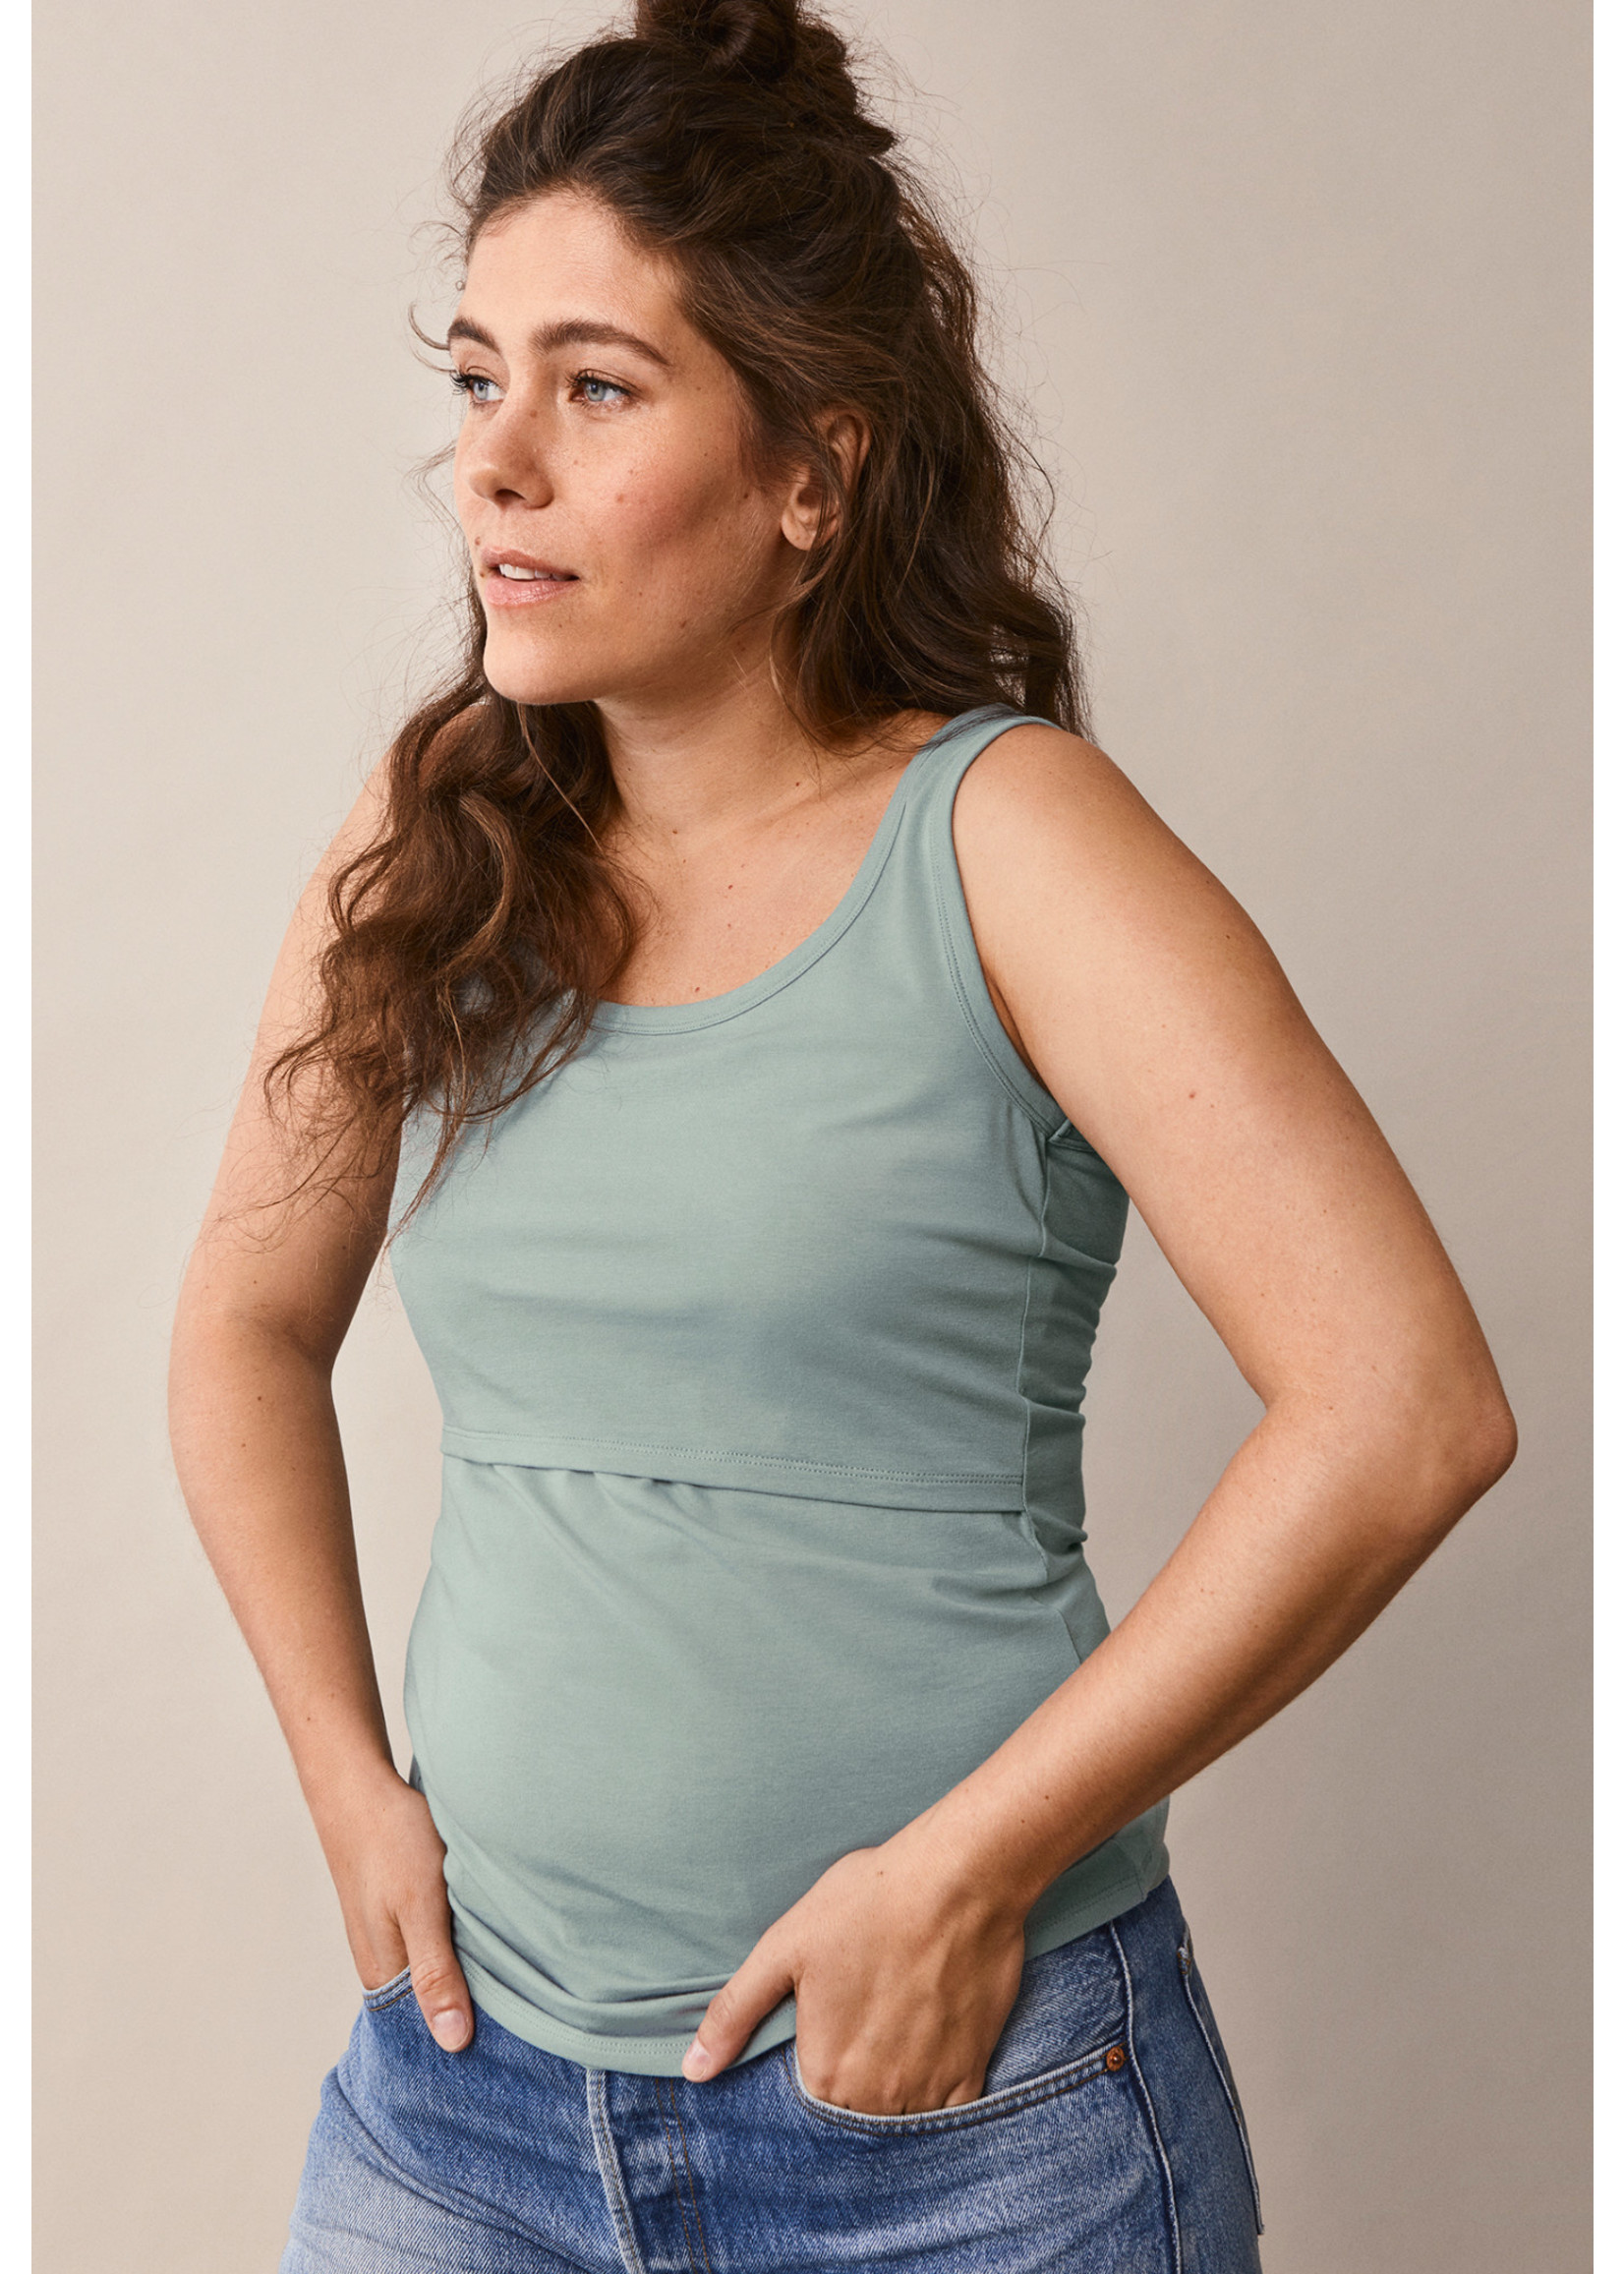 Camisole Add on Pack PDF Sewing Pattern Breastfeeding Nursing Mama Built in Bra  Dress Top Swimsuit Maternity Pregnancy Postpartum 